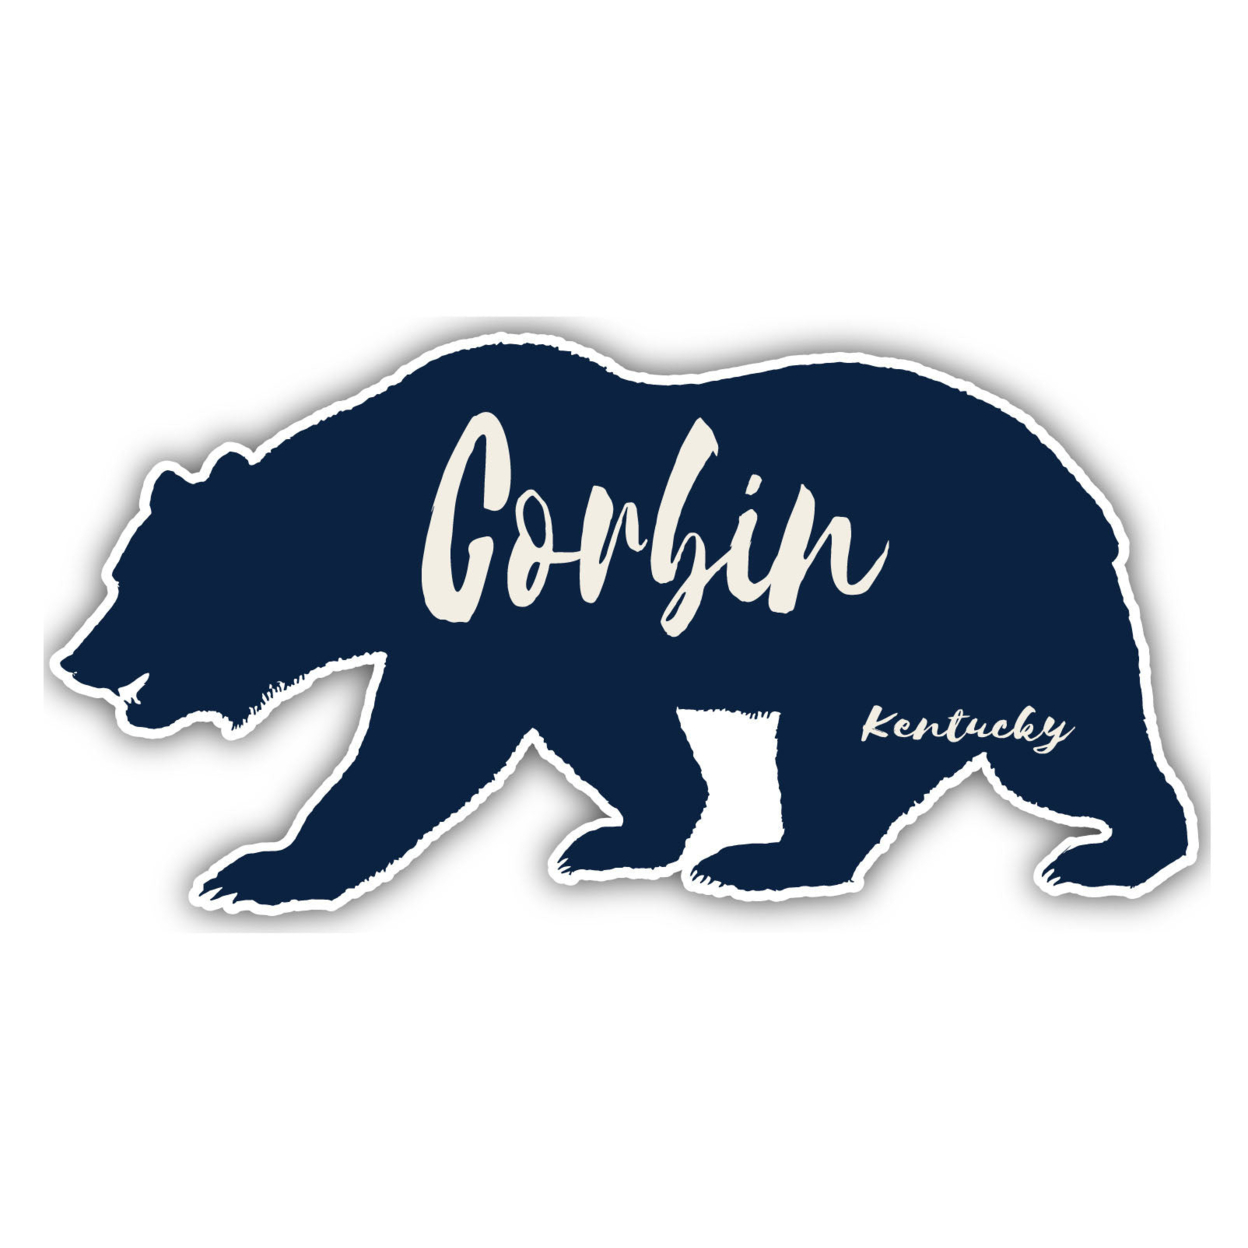 Corbin Kentucky Souvenir Decorative Stickers (Choose Theme And Size) - Single Unit, 2-Inch, Tent